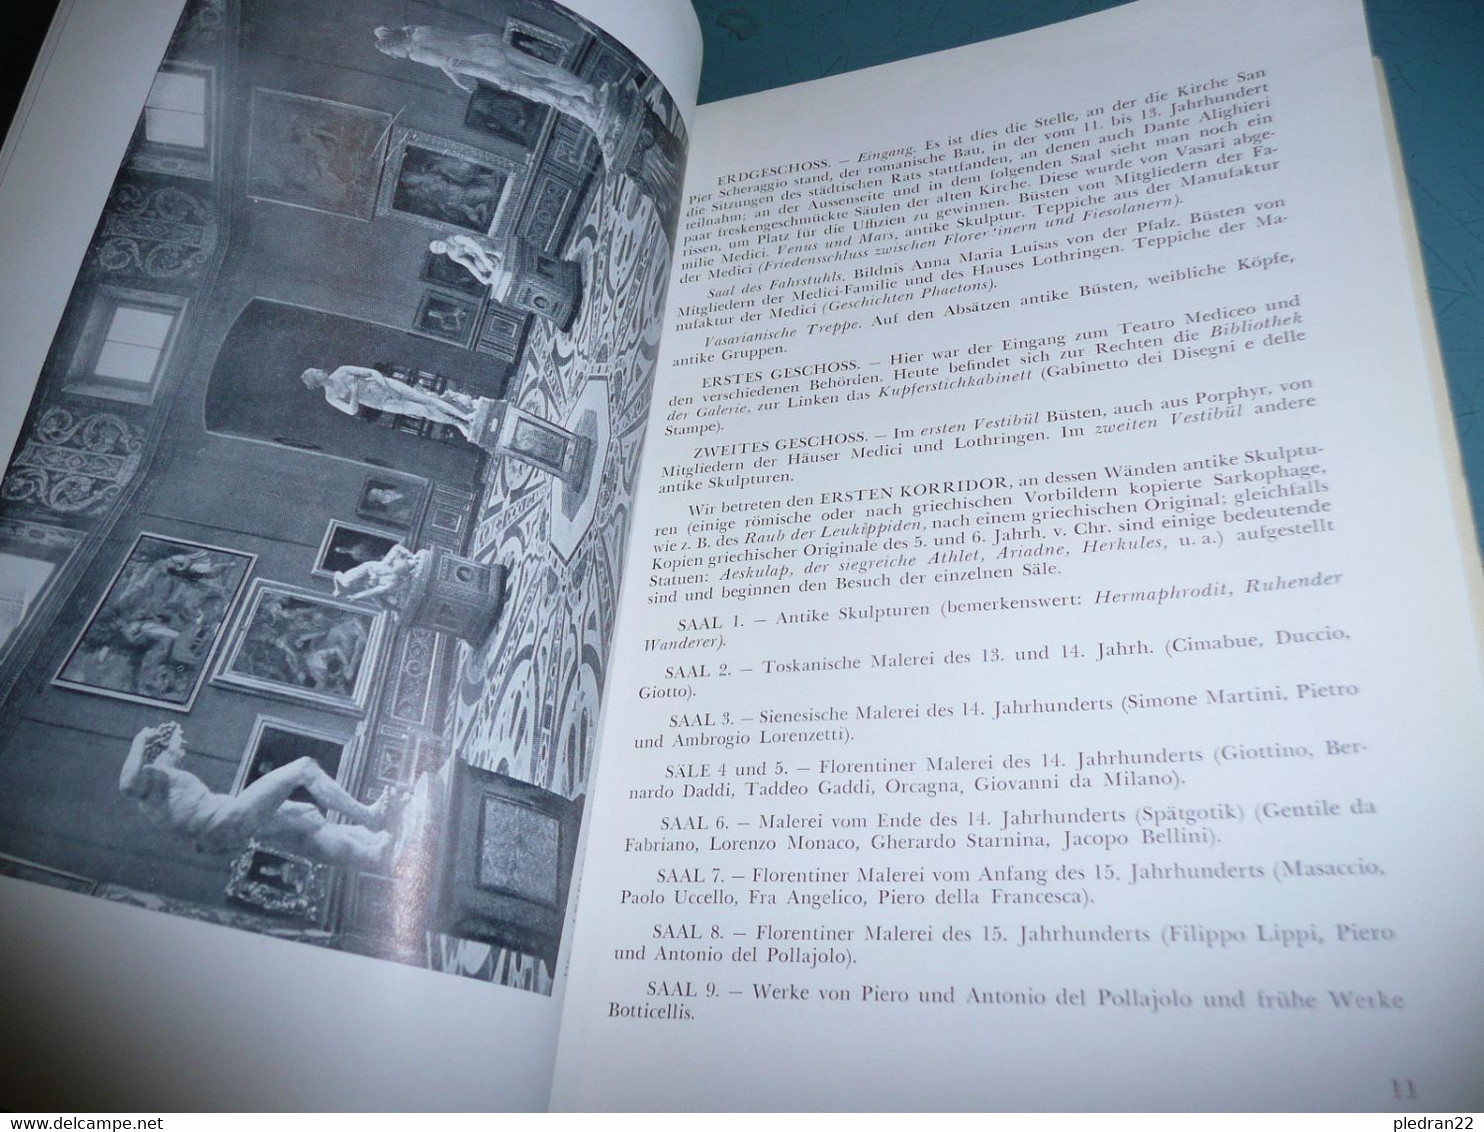 CESARE FASOLA DIE GALERIE DER UFFIZIEN IN FLORENZ GAKERIE DES OFFICES A FLORENCE ALBUM FÜHRER 1955 VERSION EN ALLEMAND - Painting & Sculpting